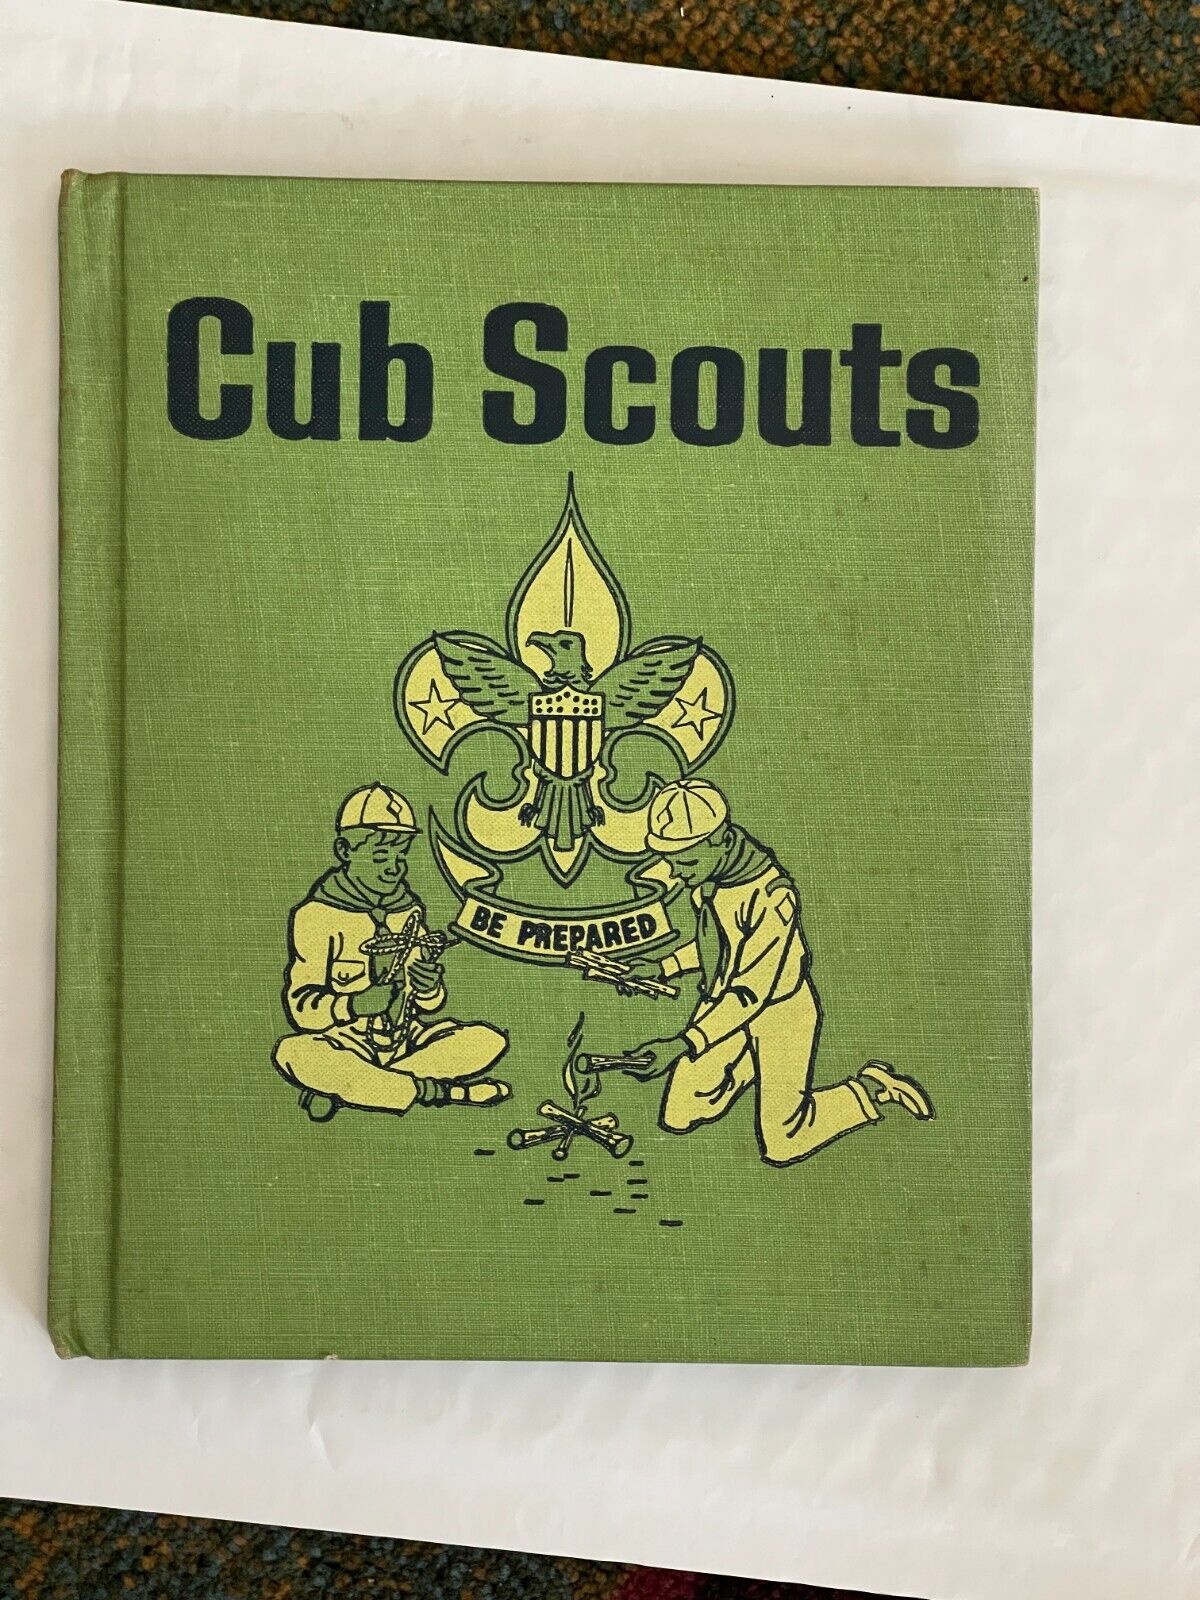 Cub scouts booklet 1959 golden book